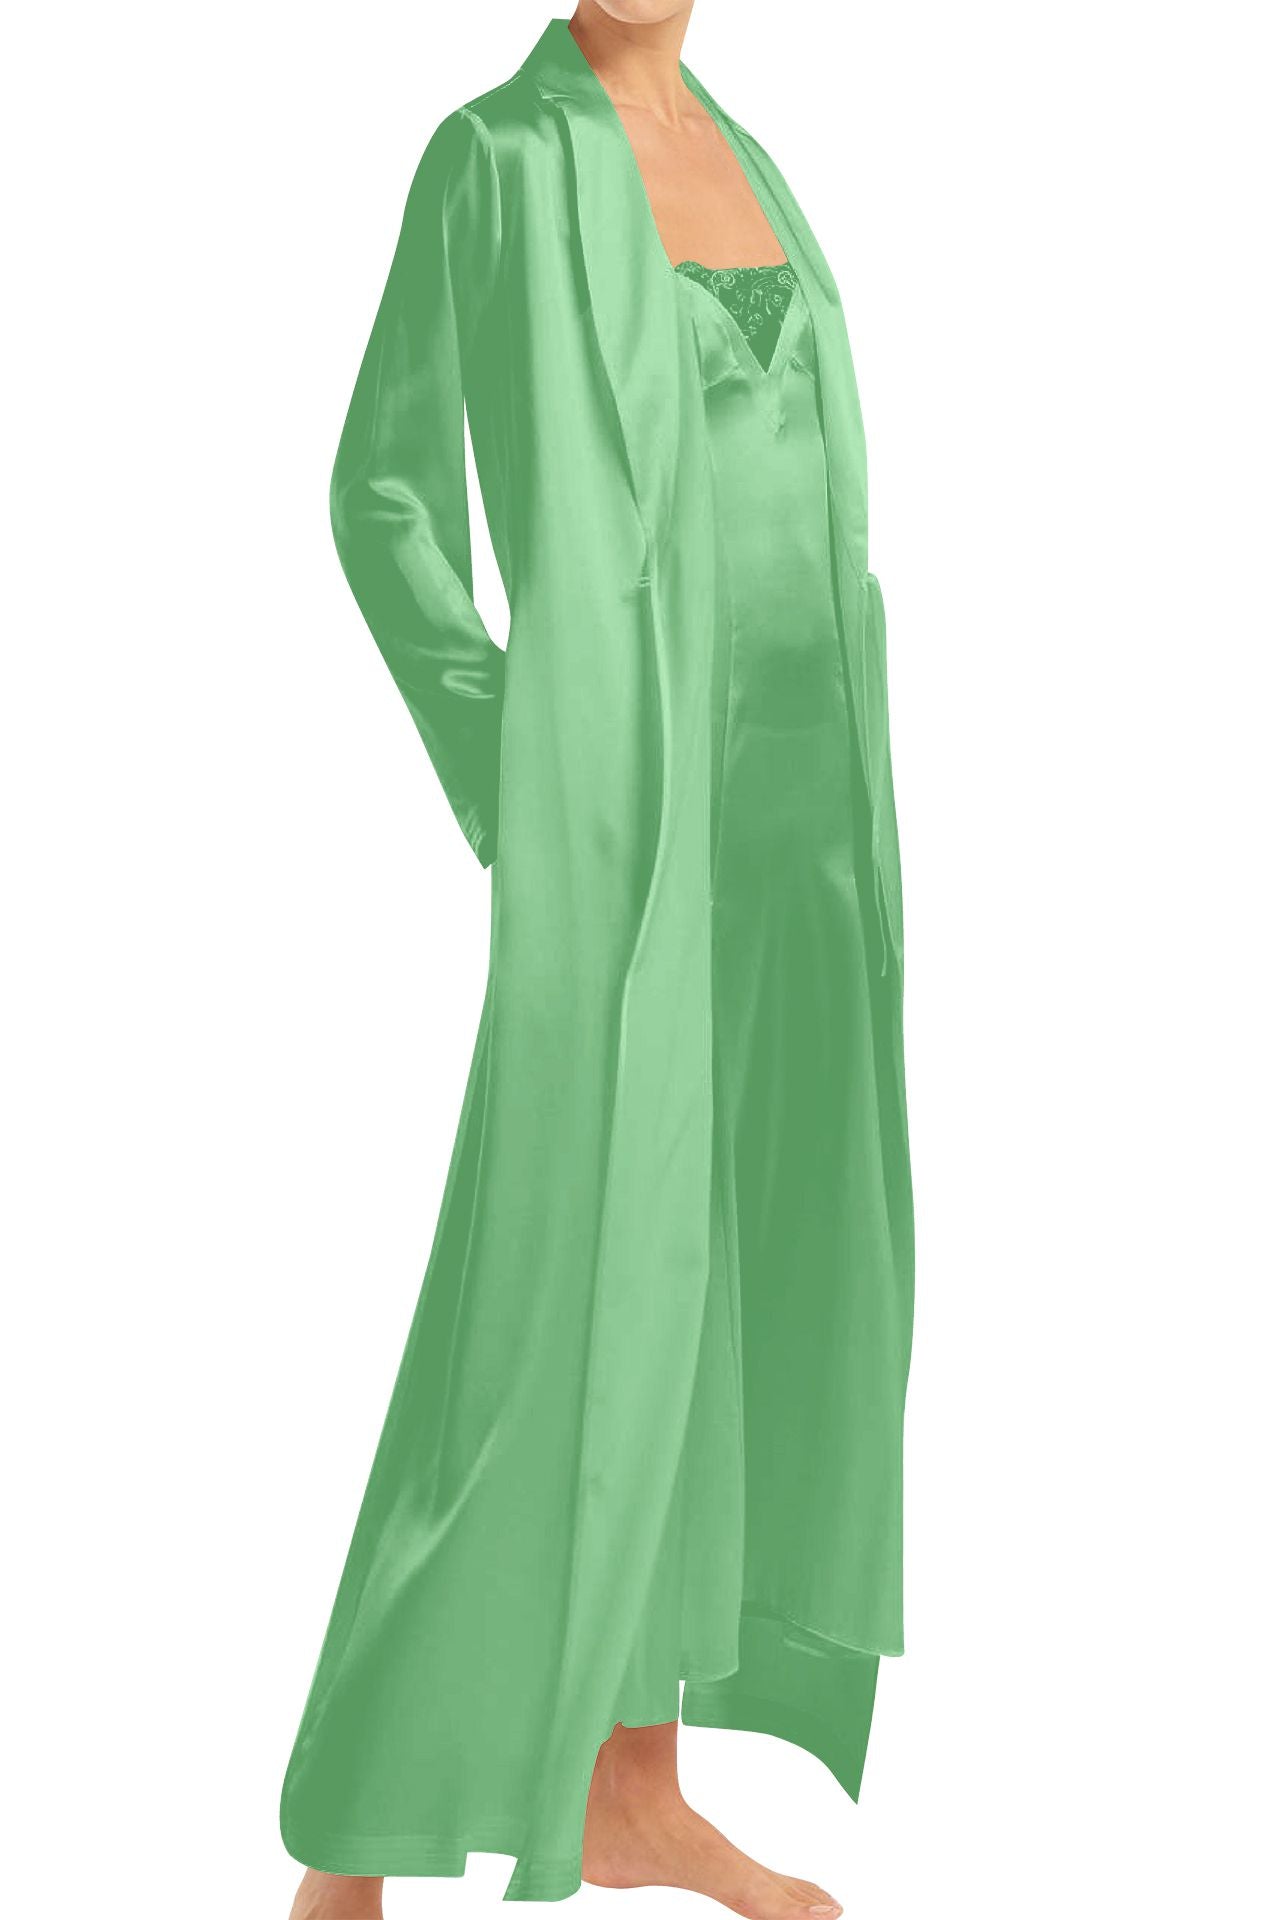 "Kyle X Shahida" "green wrap dress maxi" "long sleeve wrap dress" "wrap maxi dress green"